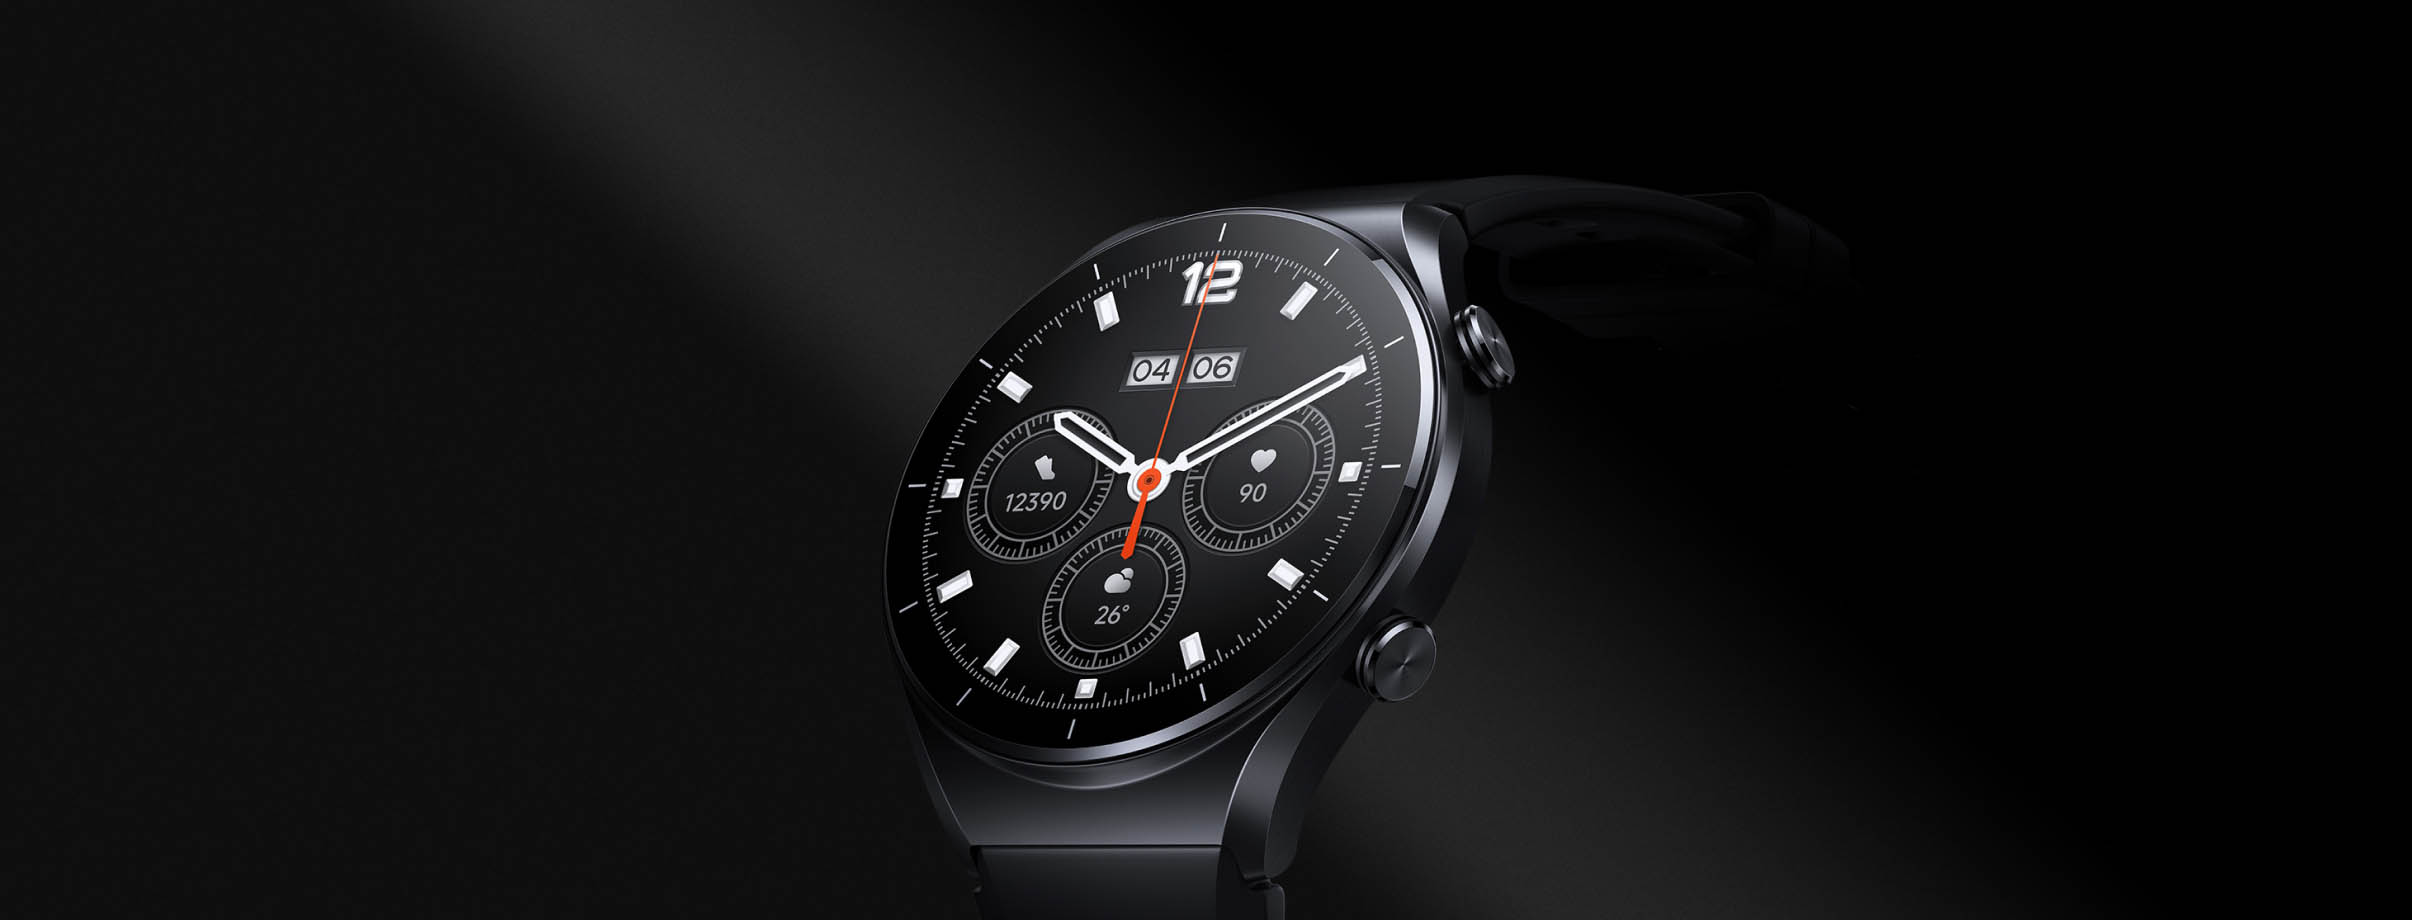 Часы xiaomi watch 1. Часы Сяоми s1. Смарт-часы Xiaomi watch s1. Часы Сяоми s1 Active. Xiaomi watch s1 черные.